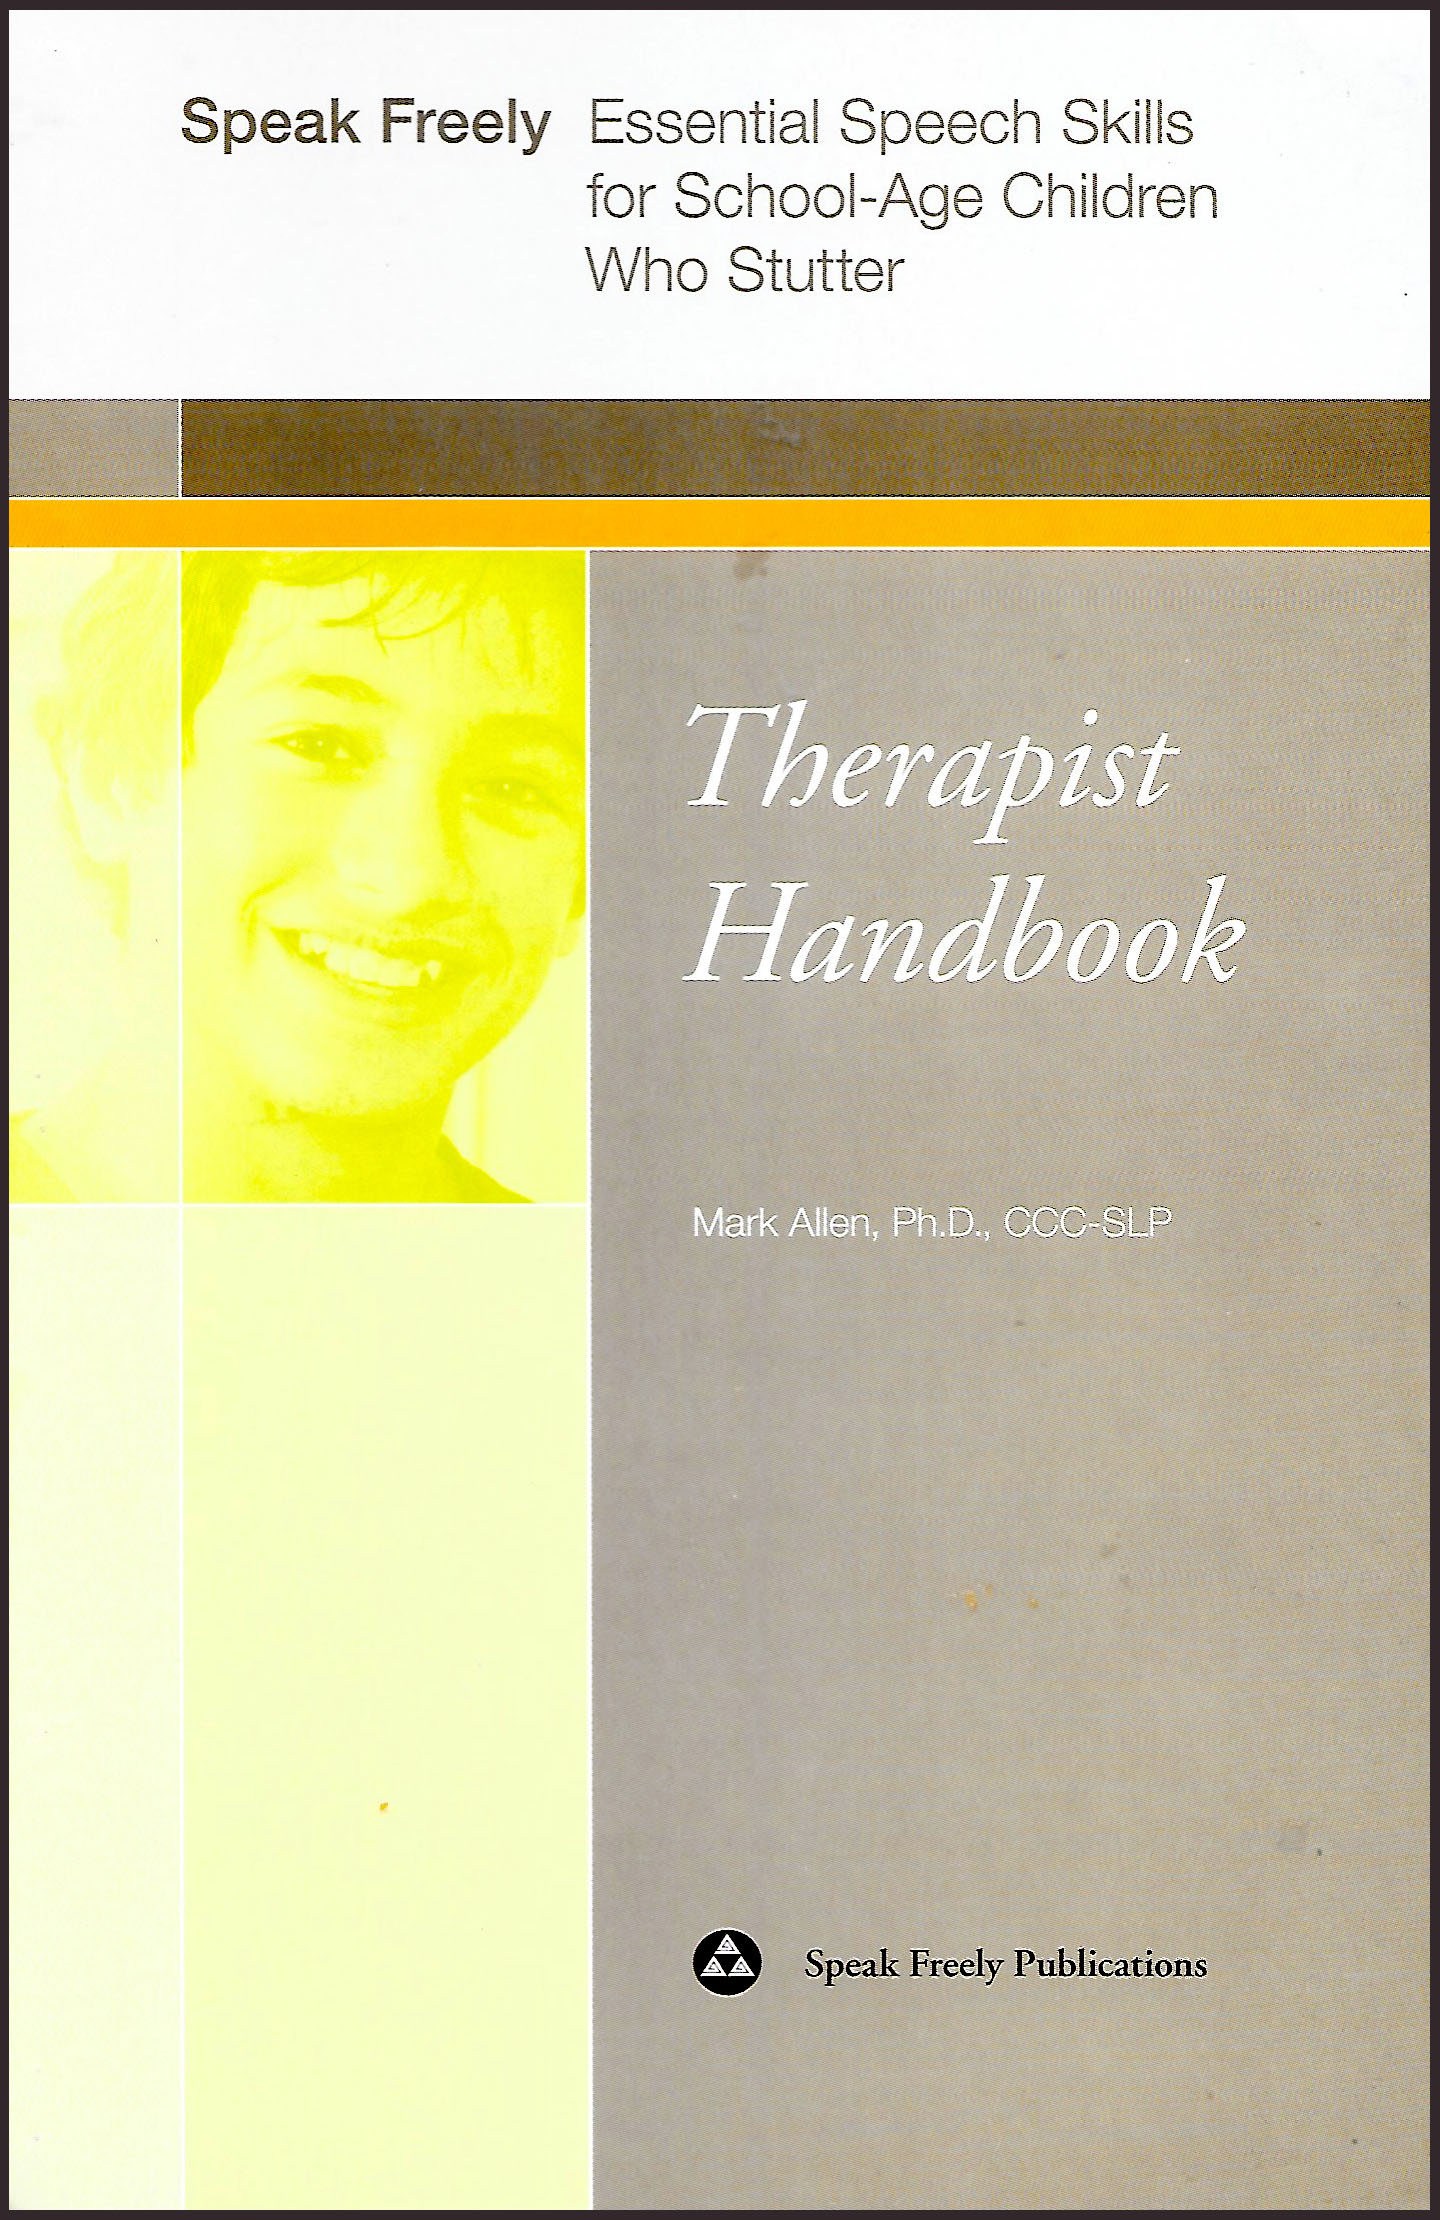 cover of handbook